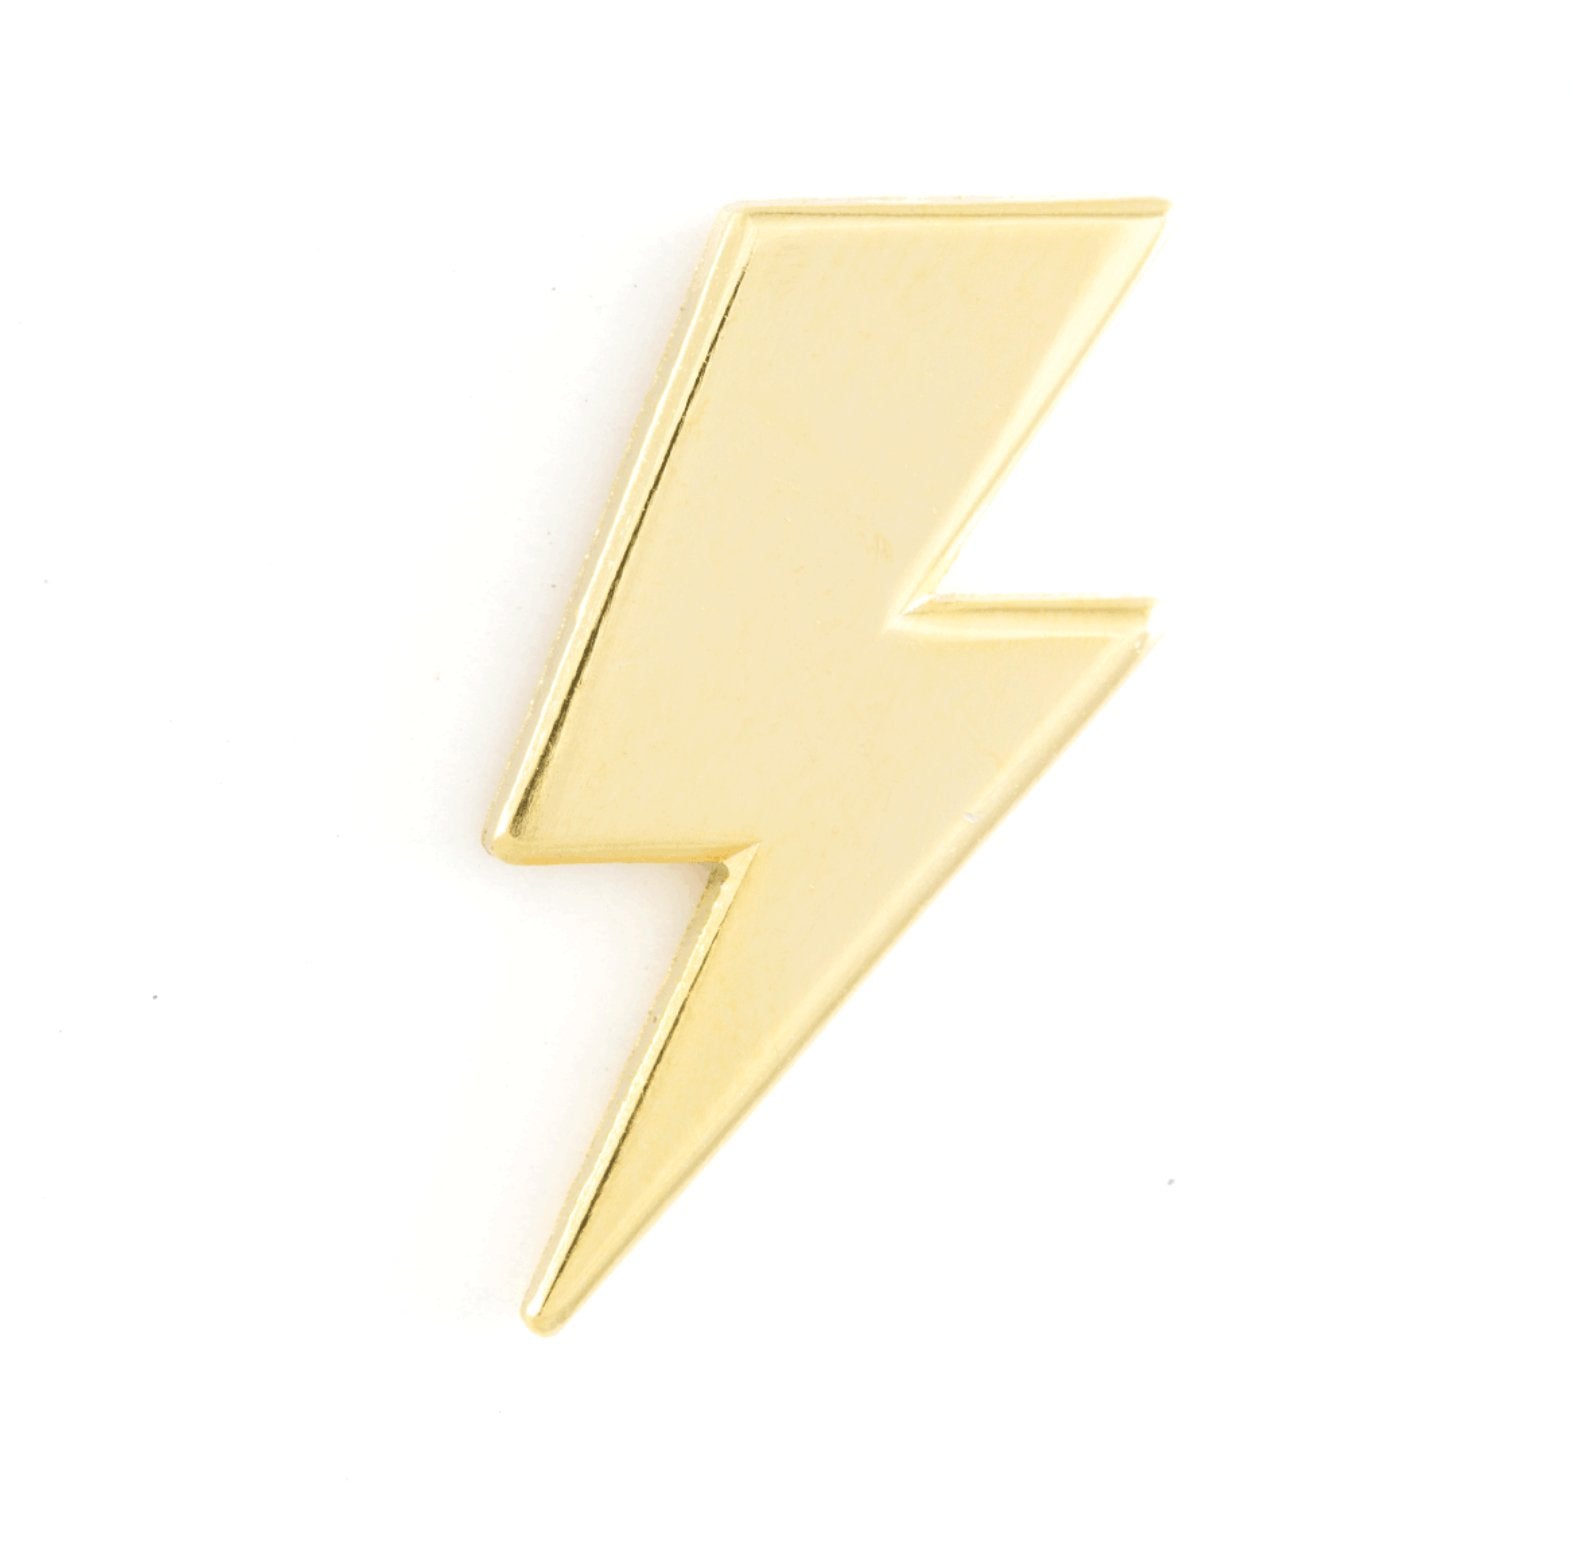 Lightning Bolt Enamel Pin - The Mystics Club